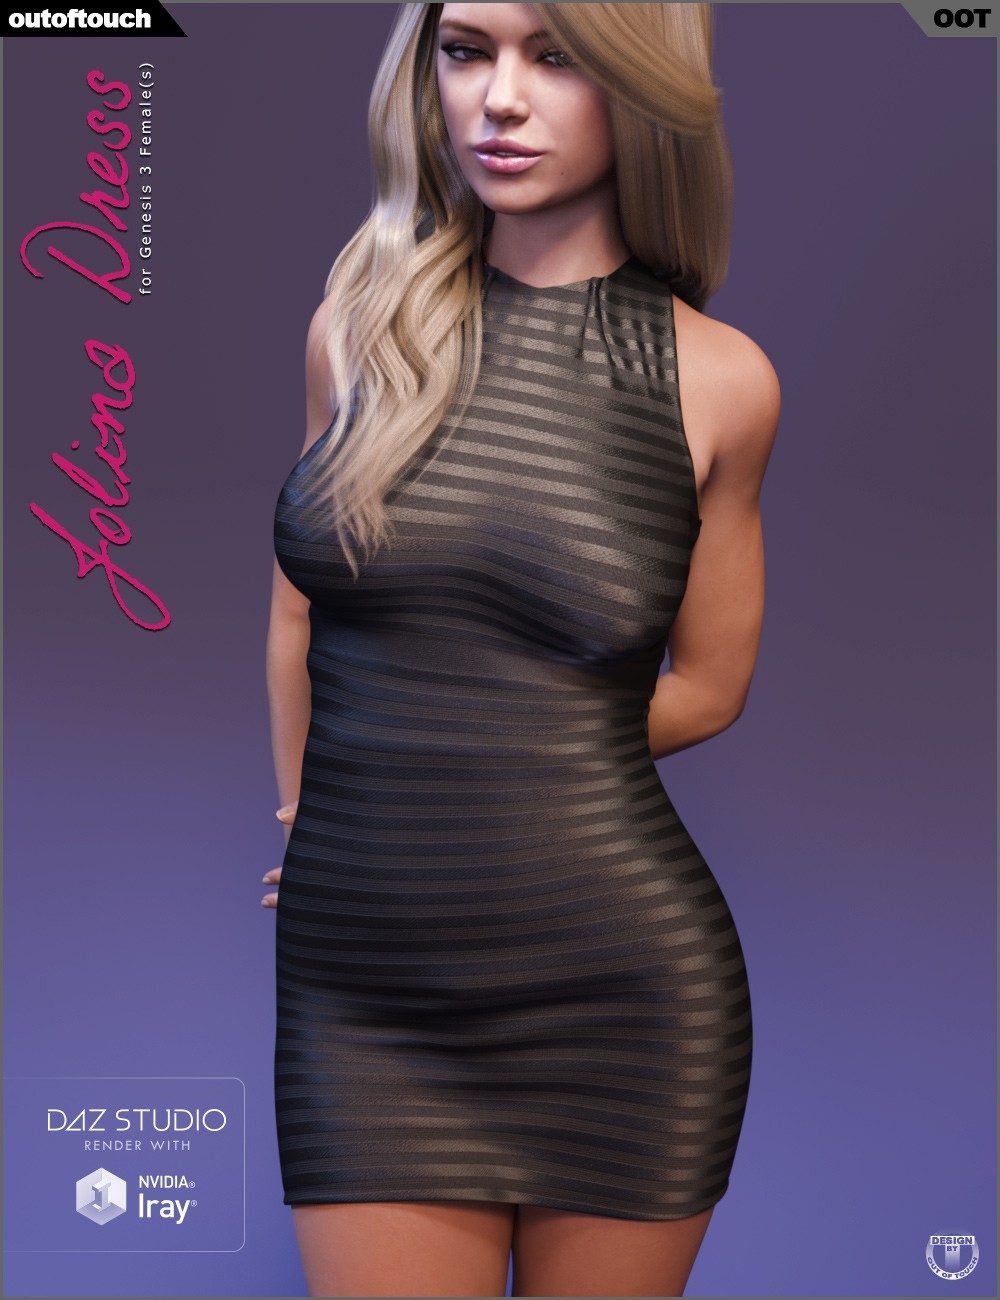 Download DAZ Studio 3 for FREE!: DAZ 3D - Jolina Dress for 